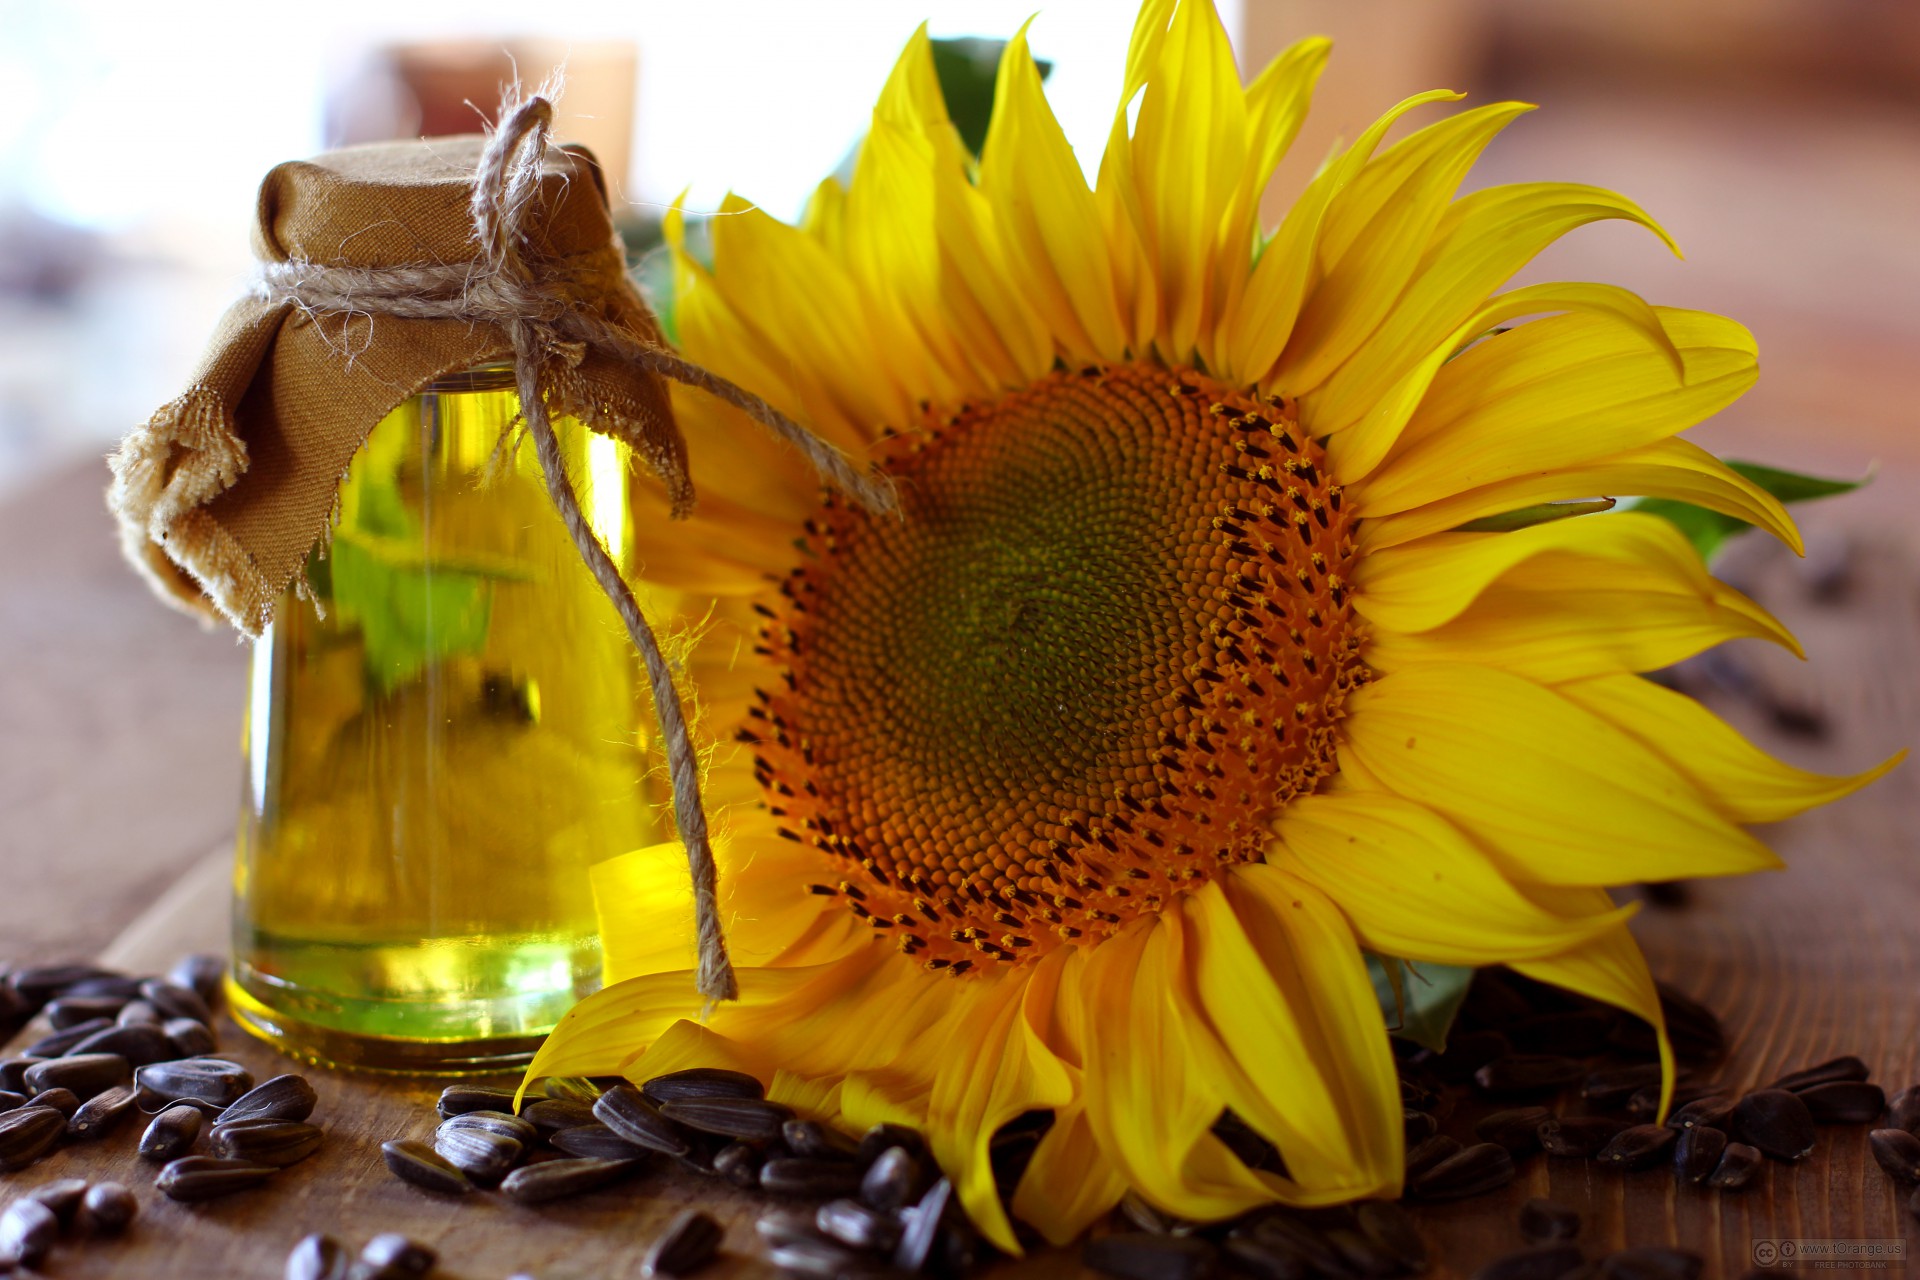 Ukraine Rising sunflower oil prices due to Russian war